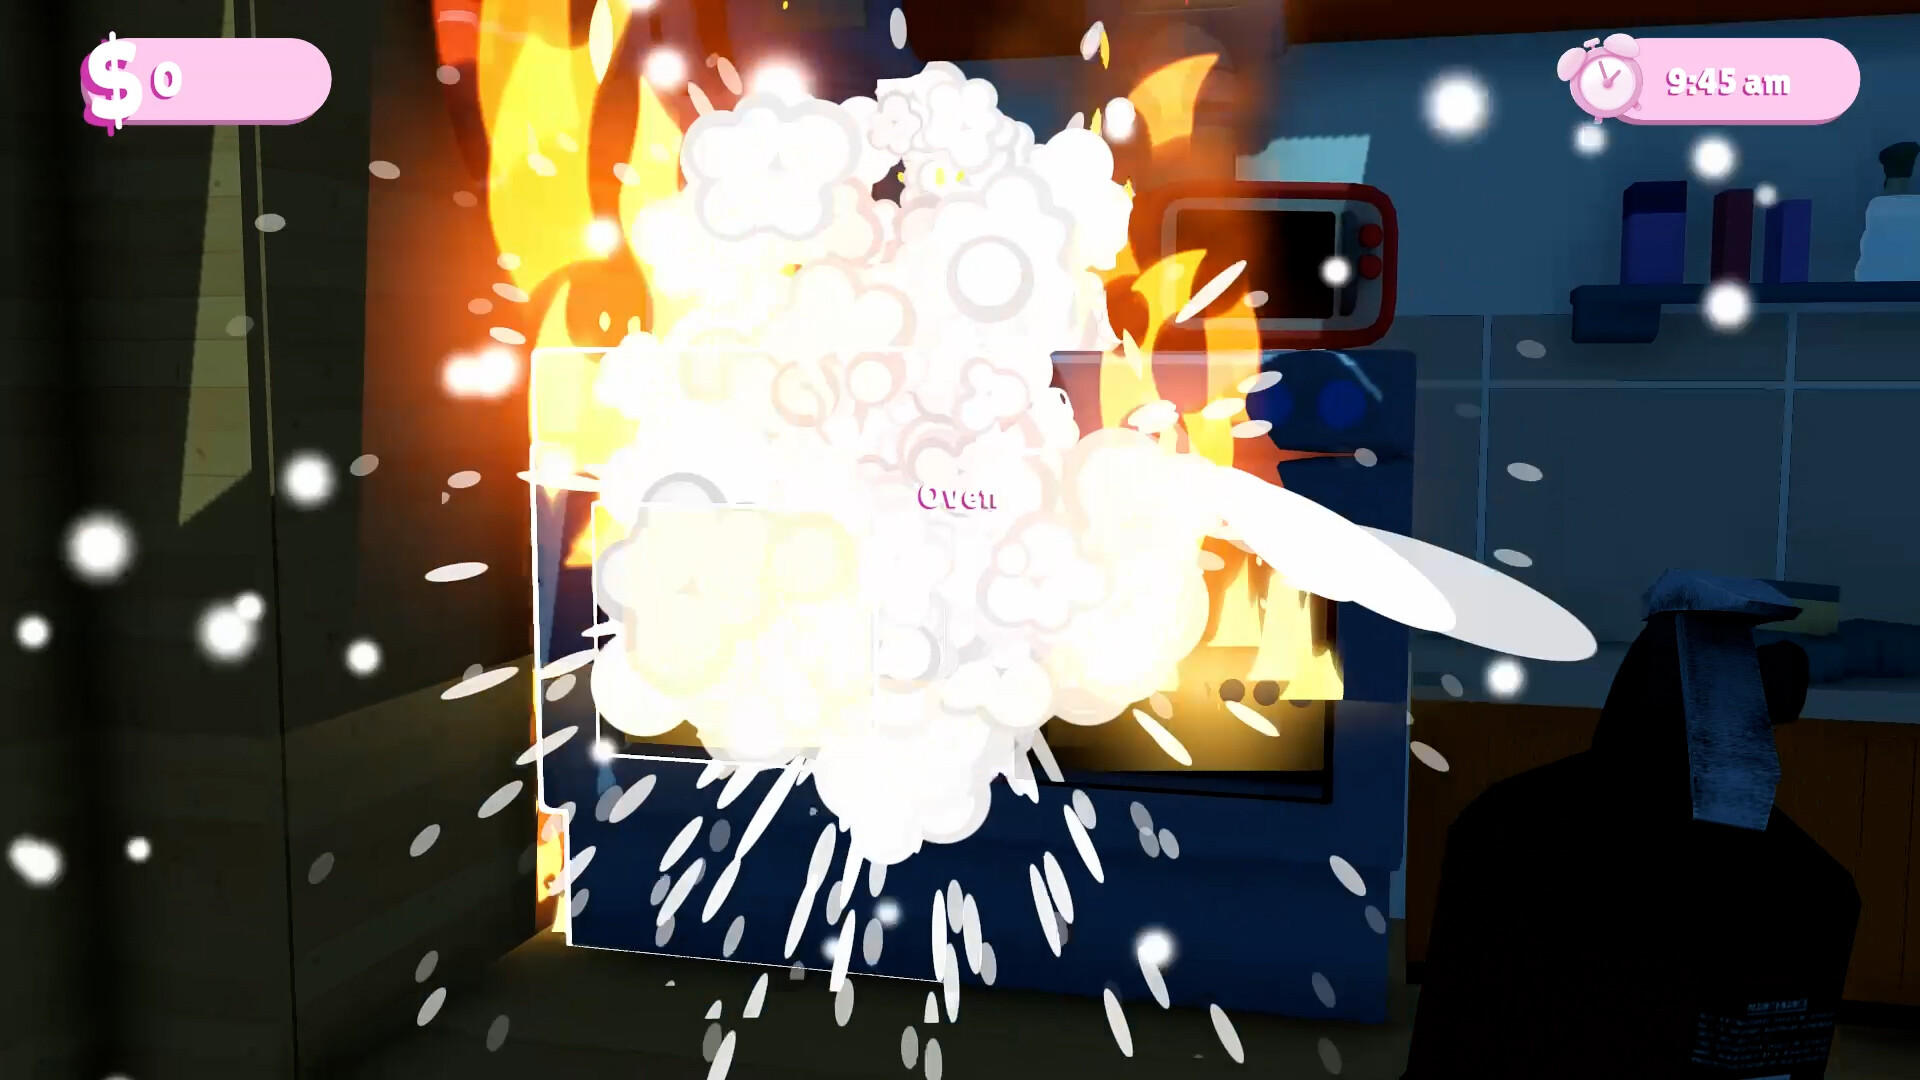 Screenshot 1 of Simulador de panadería Super Waifu 